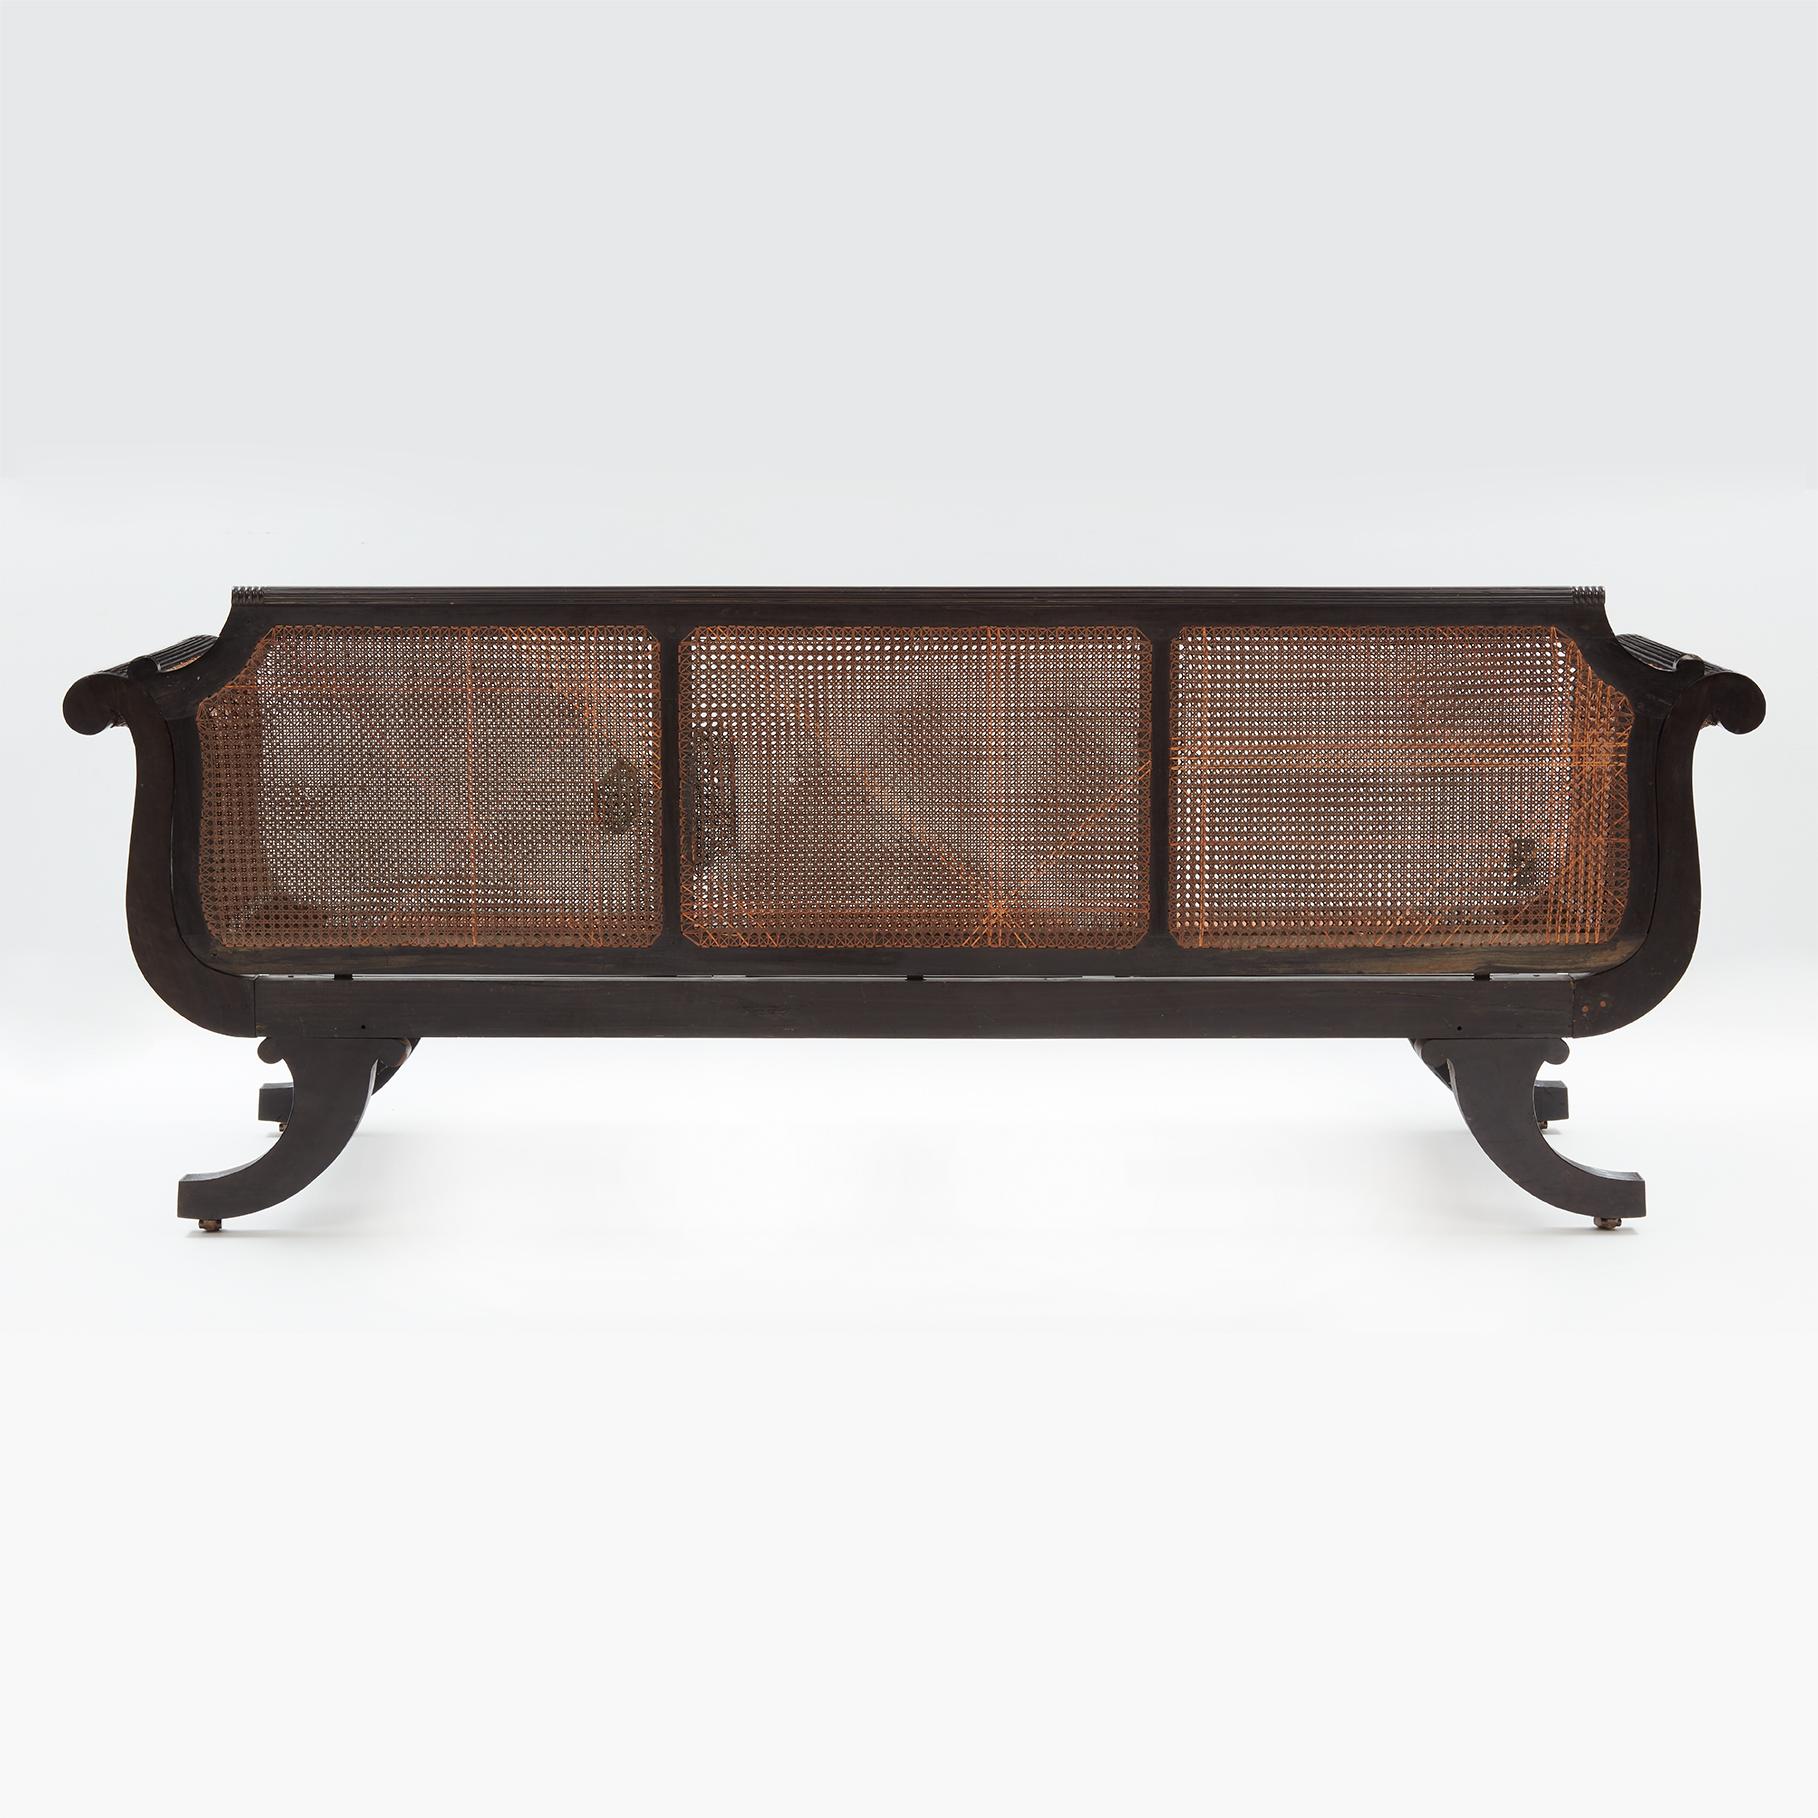 Indian Ceylonese Ebony Framed Sofa in Regency Style, Circa 1830 For Sale